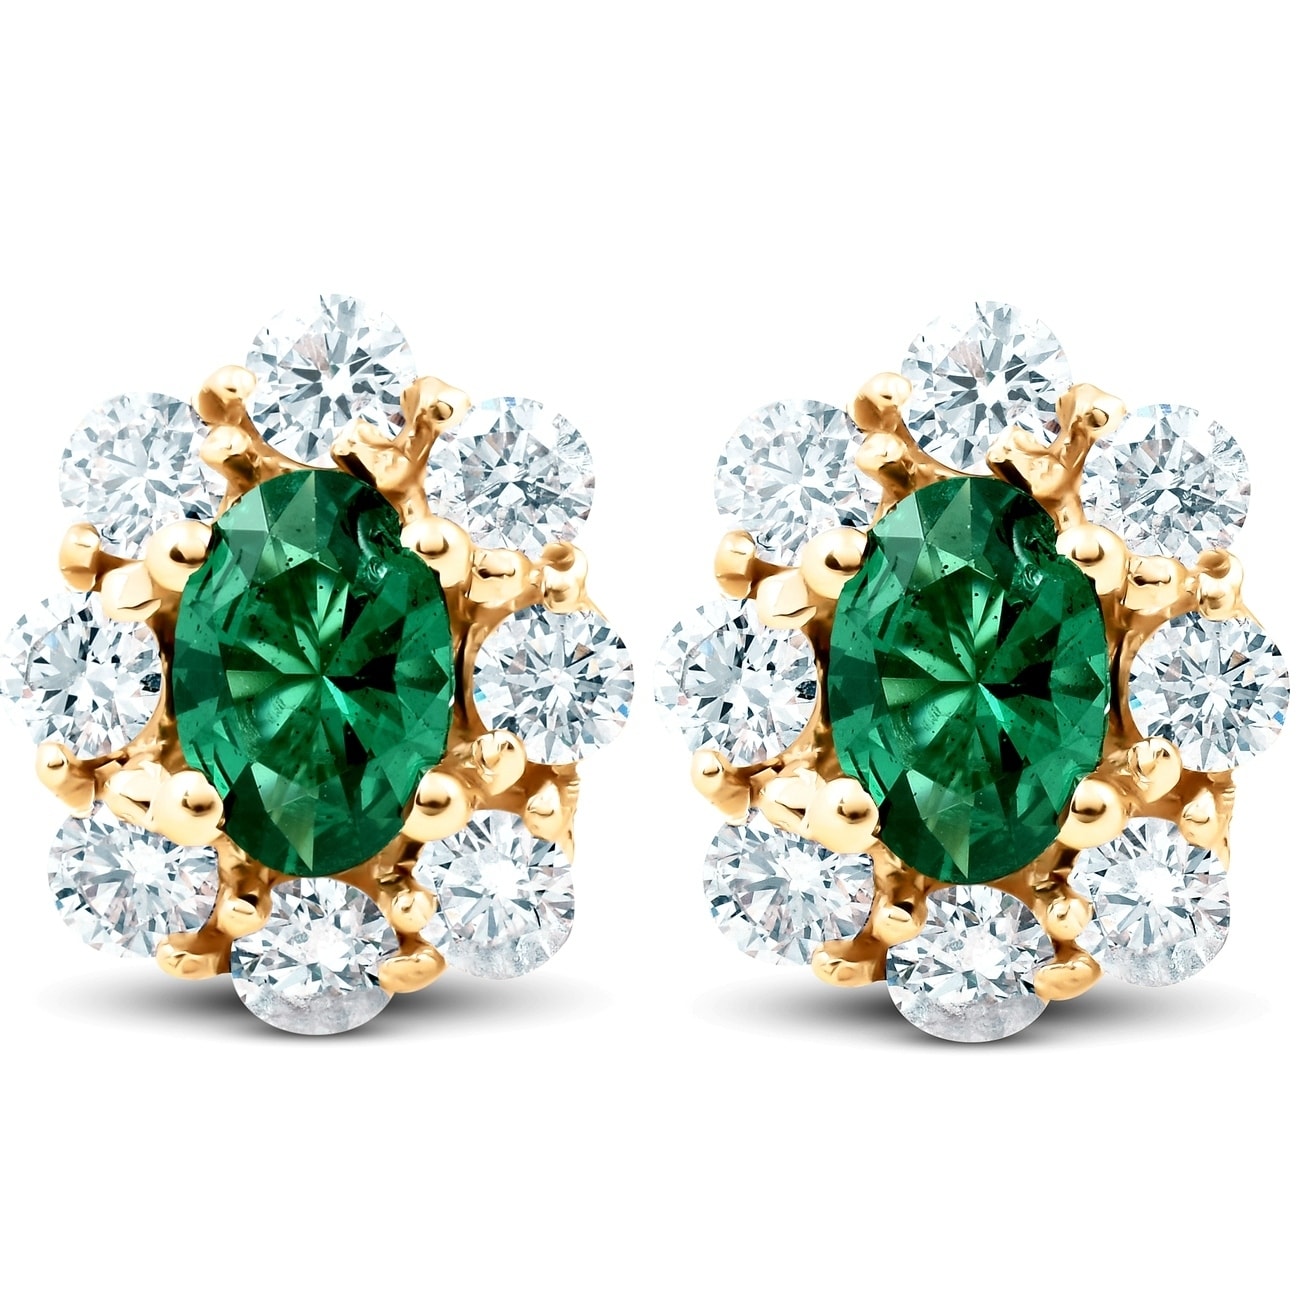 3 Ct Emerald Cut Green Emerald & Diamond Halo Stud Earrings 14K White Gold Over